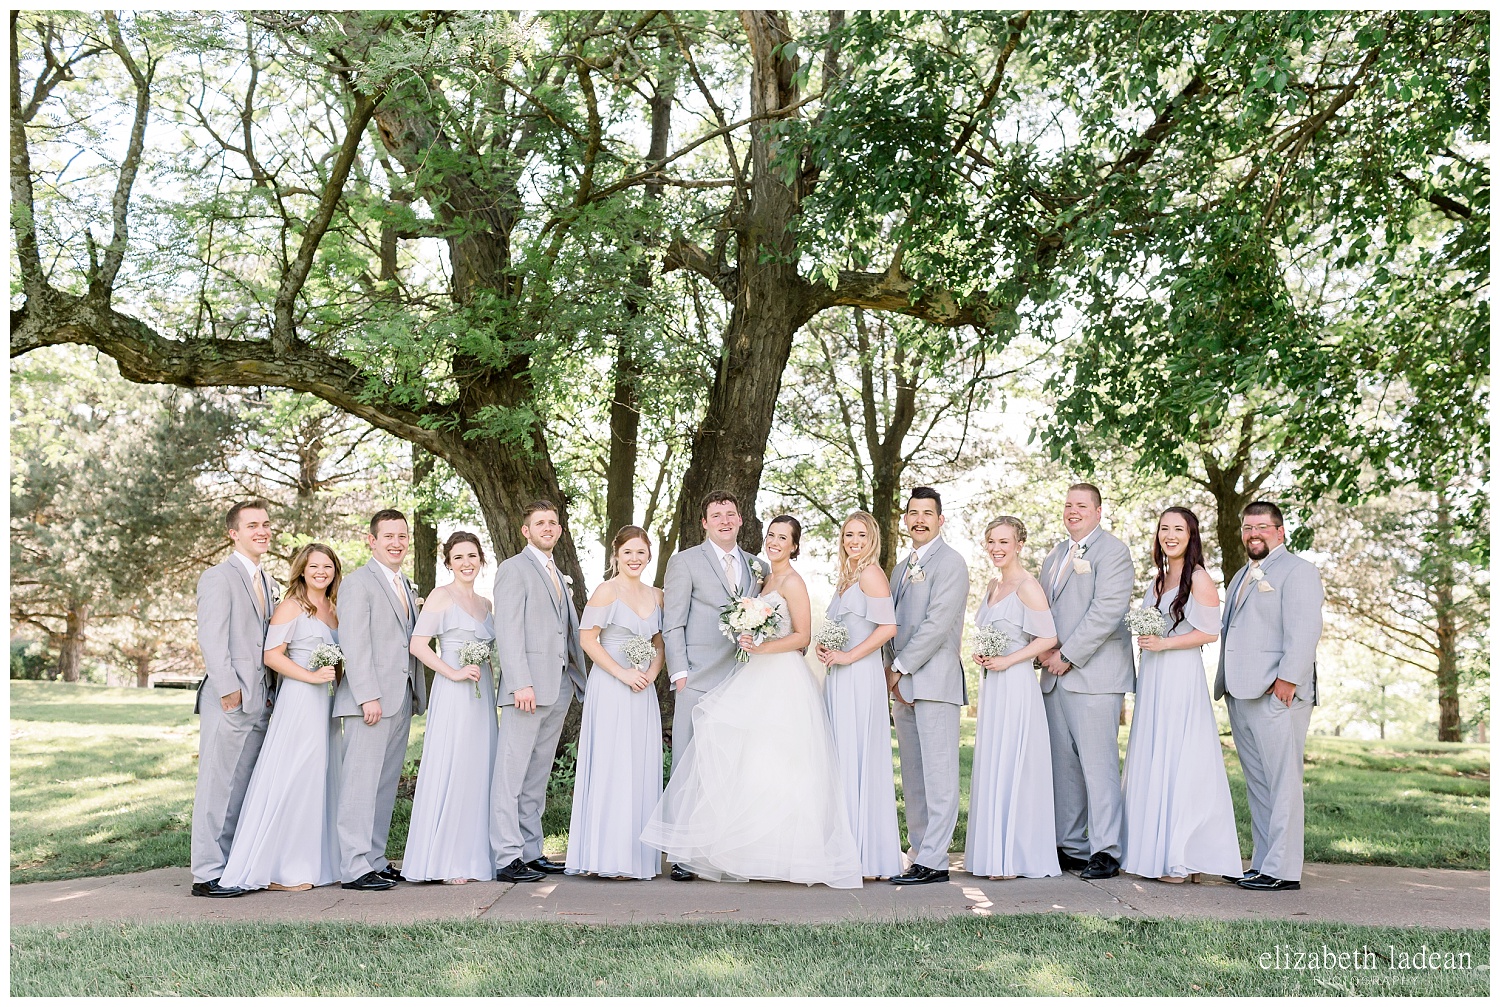  Bridal party wedding photography at Deer Creek, Kansas 